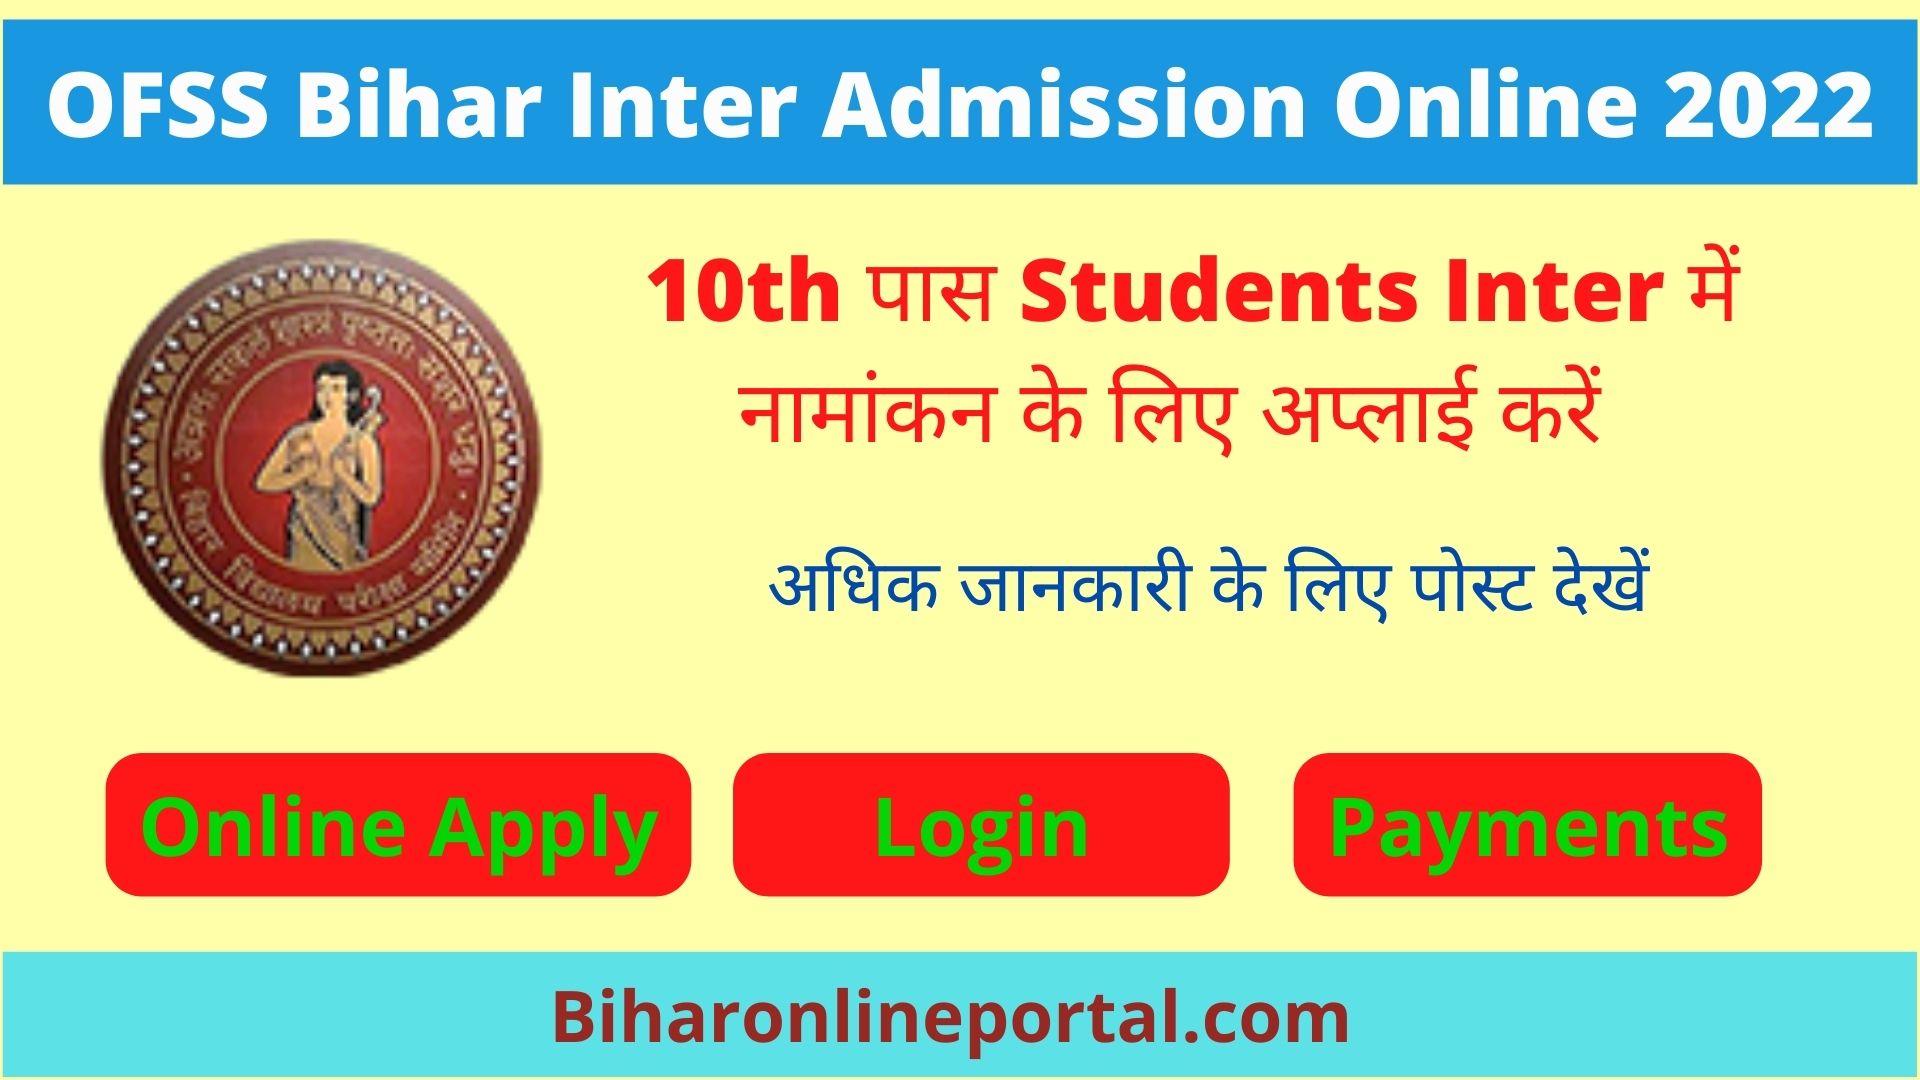 Ofss bihar inter admission 2022